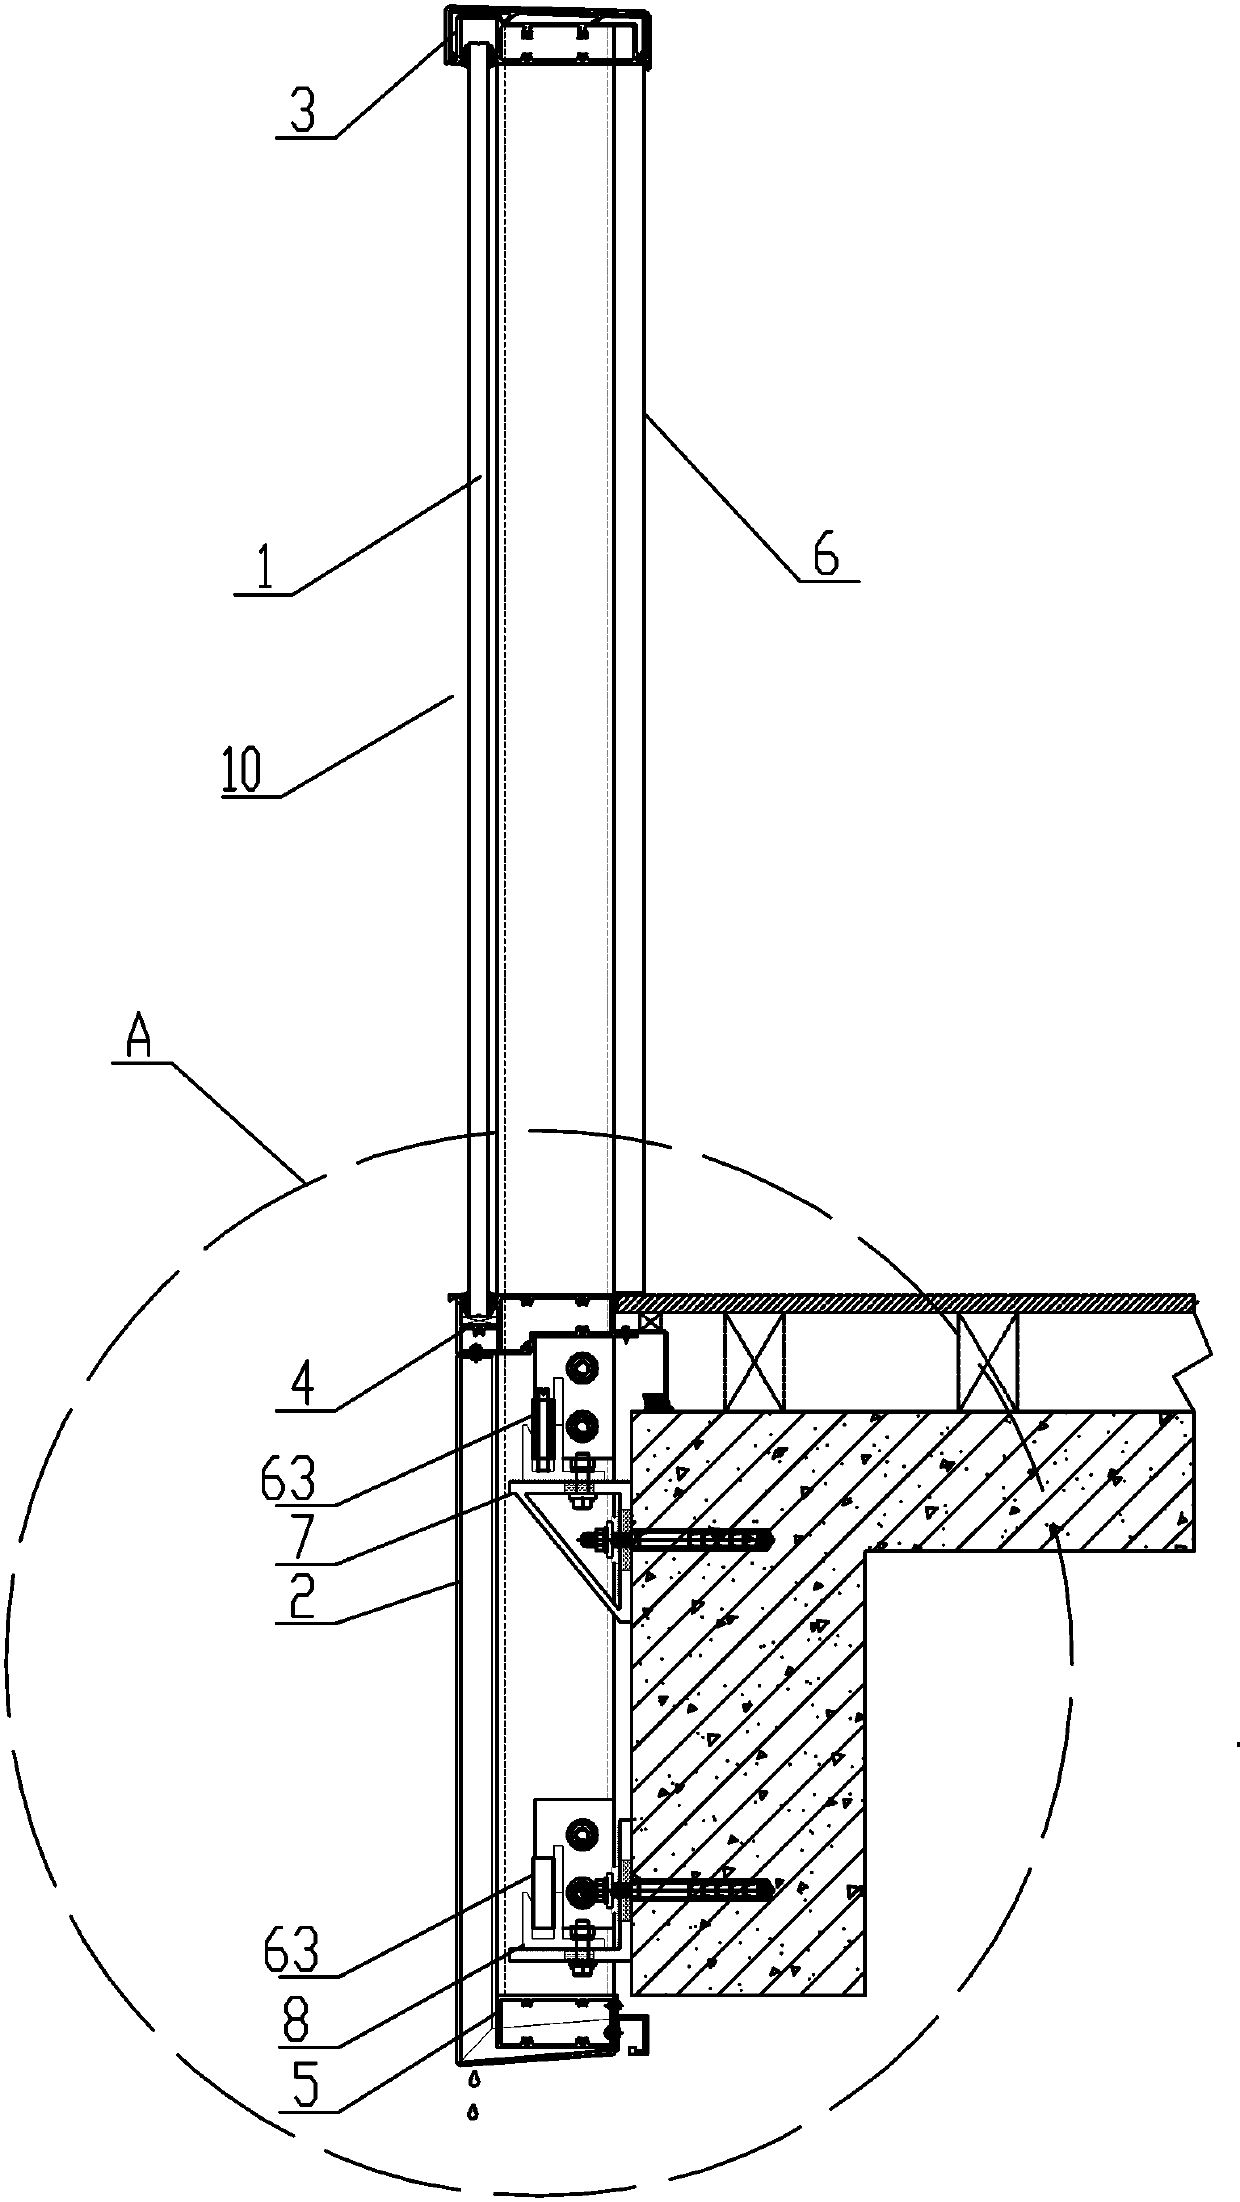 Unit-type vertical guardrail system